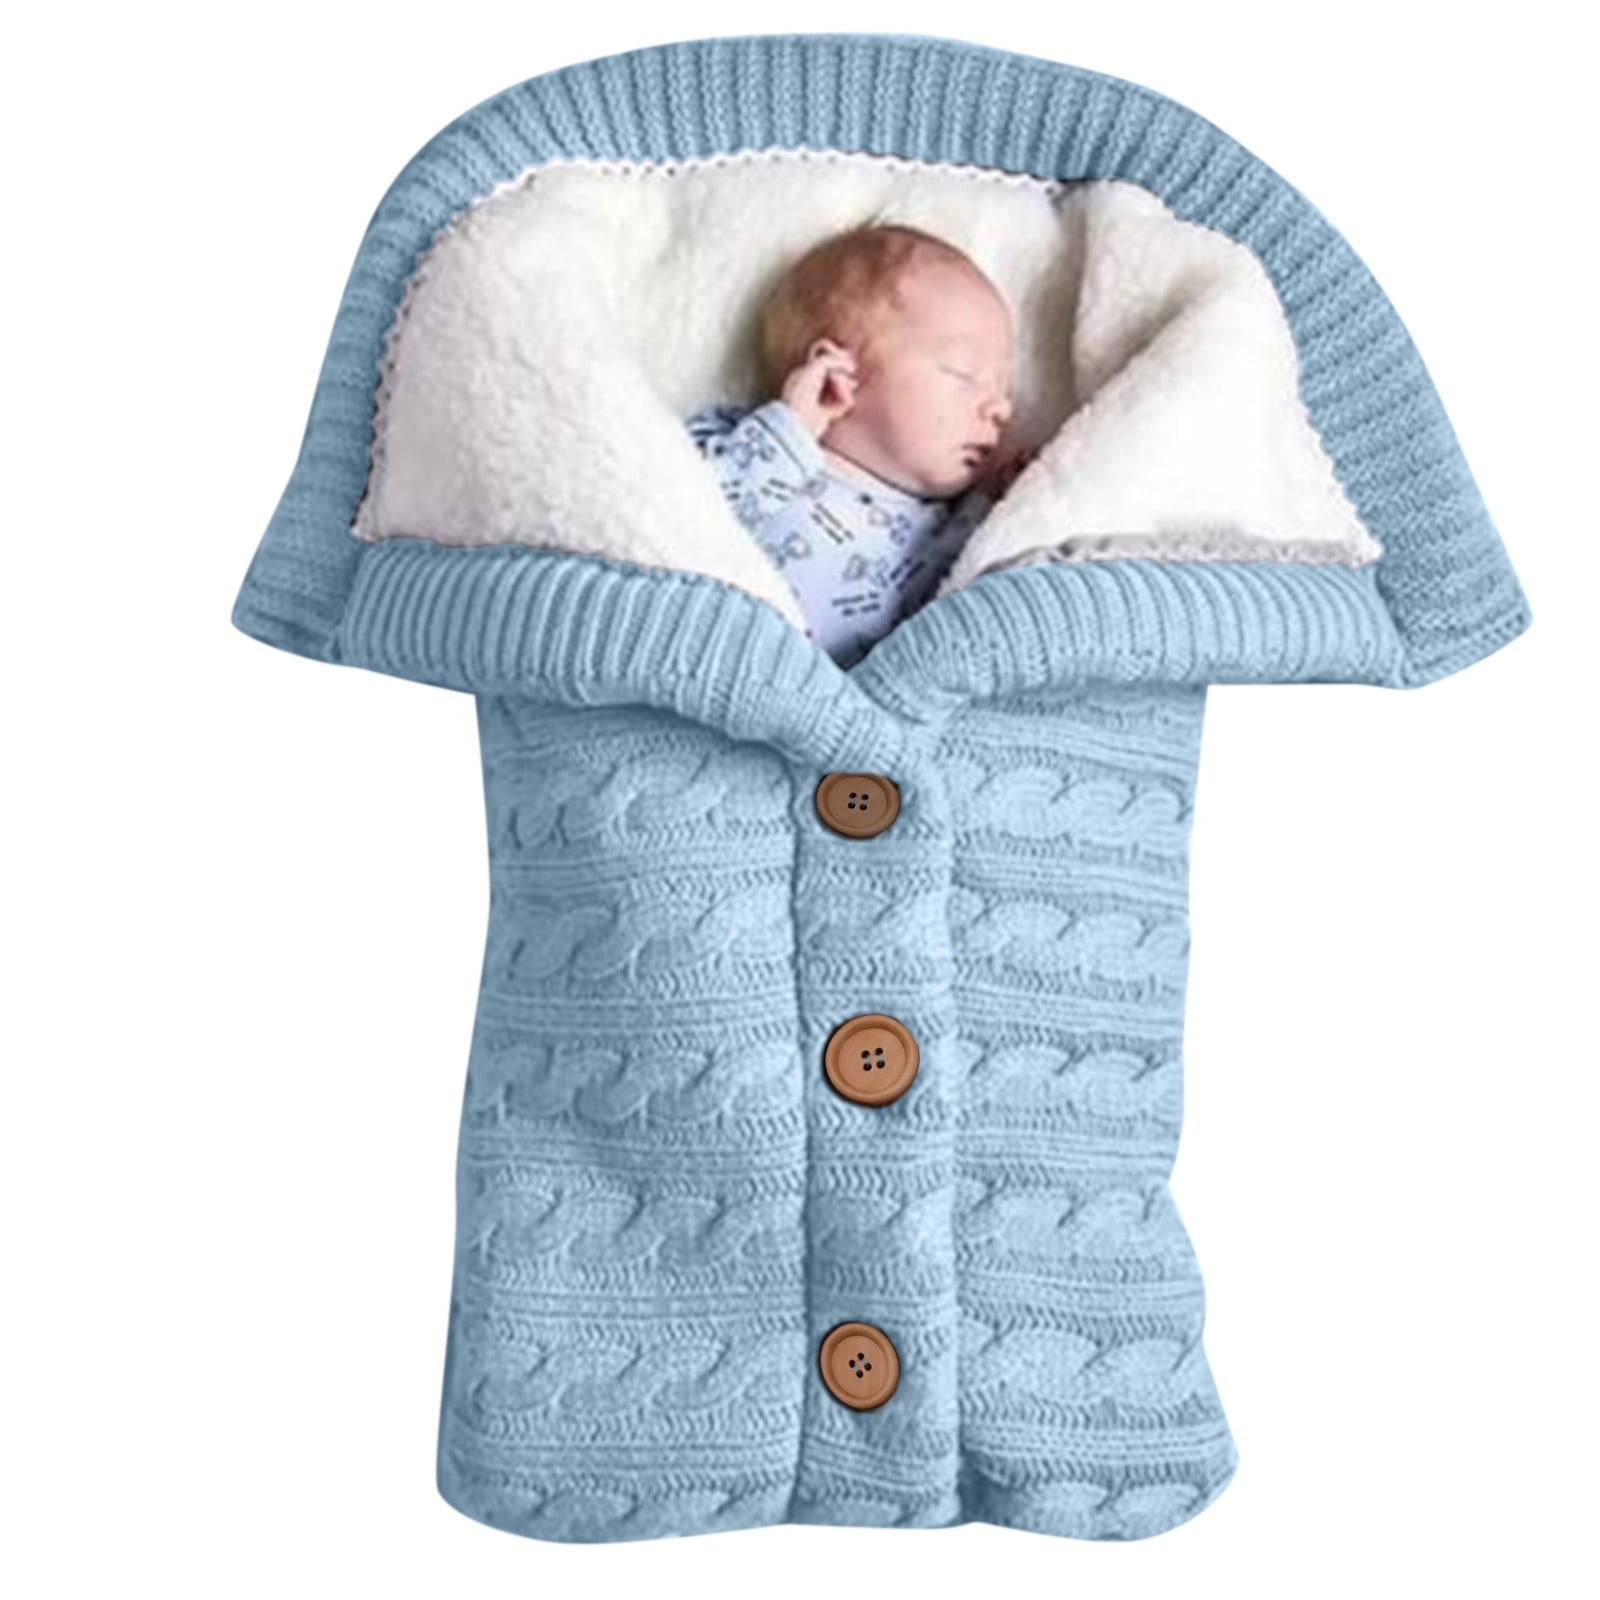 Newborn Infant Baby Blanket Cashmere Winter Warm Swaddle Wrap Sleeping Bag 